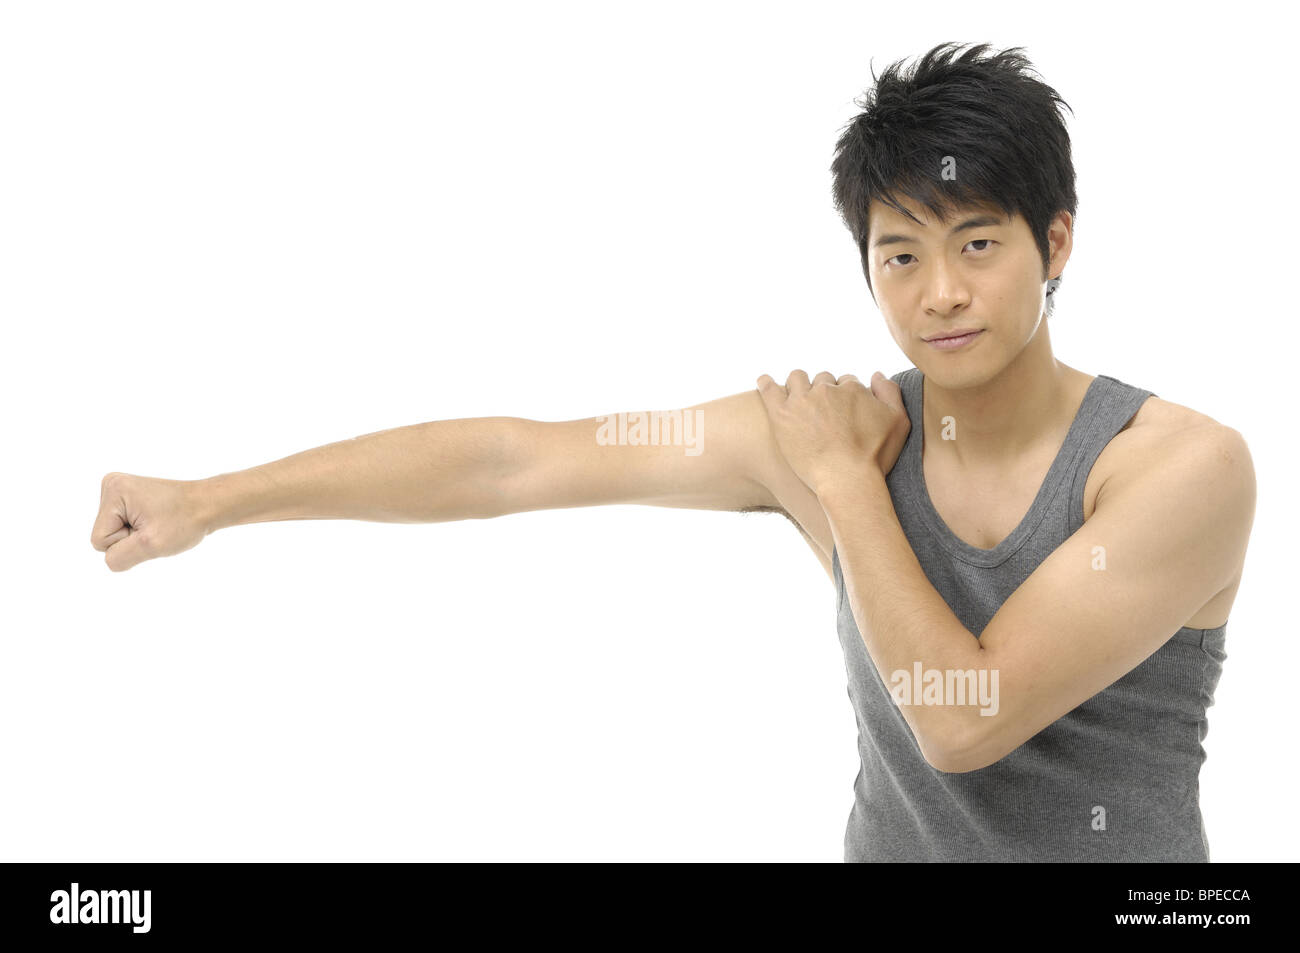 Man flexing muscles Stock Photo